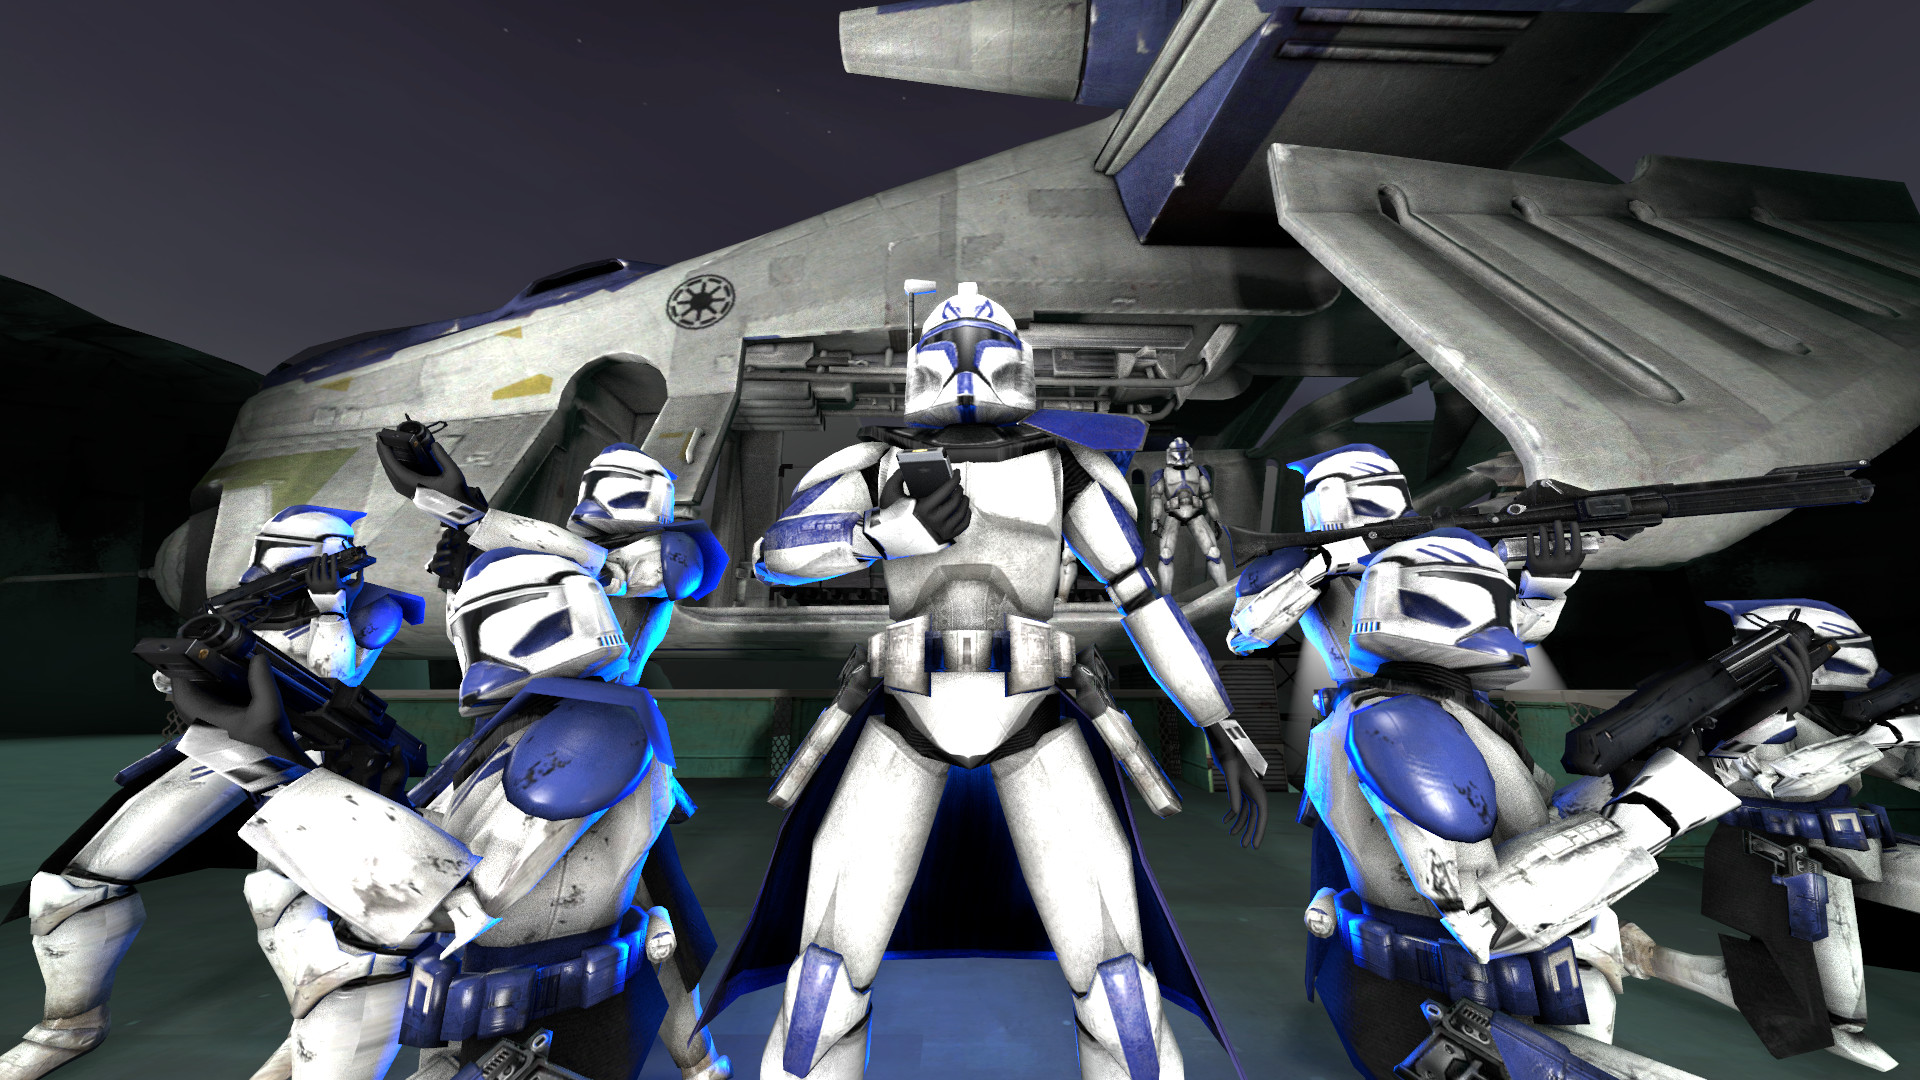 501st Clone Trooper Wallpaper Image